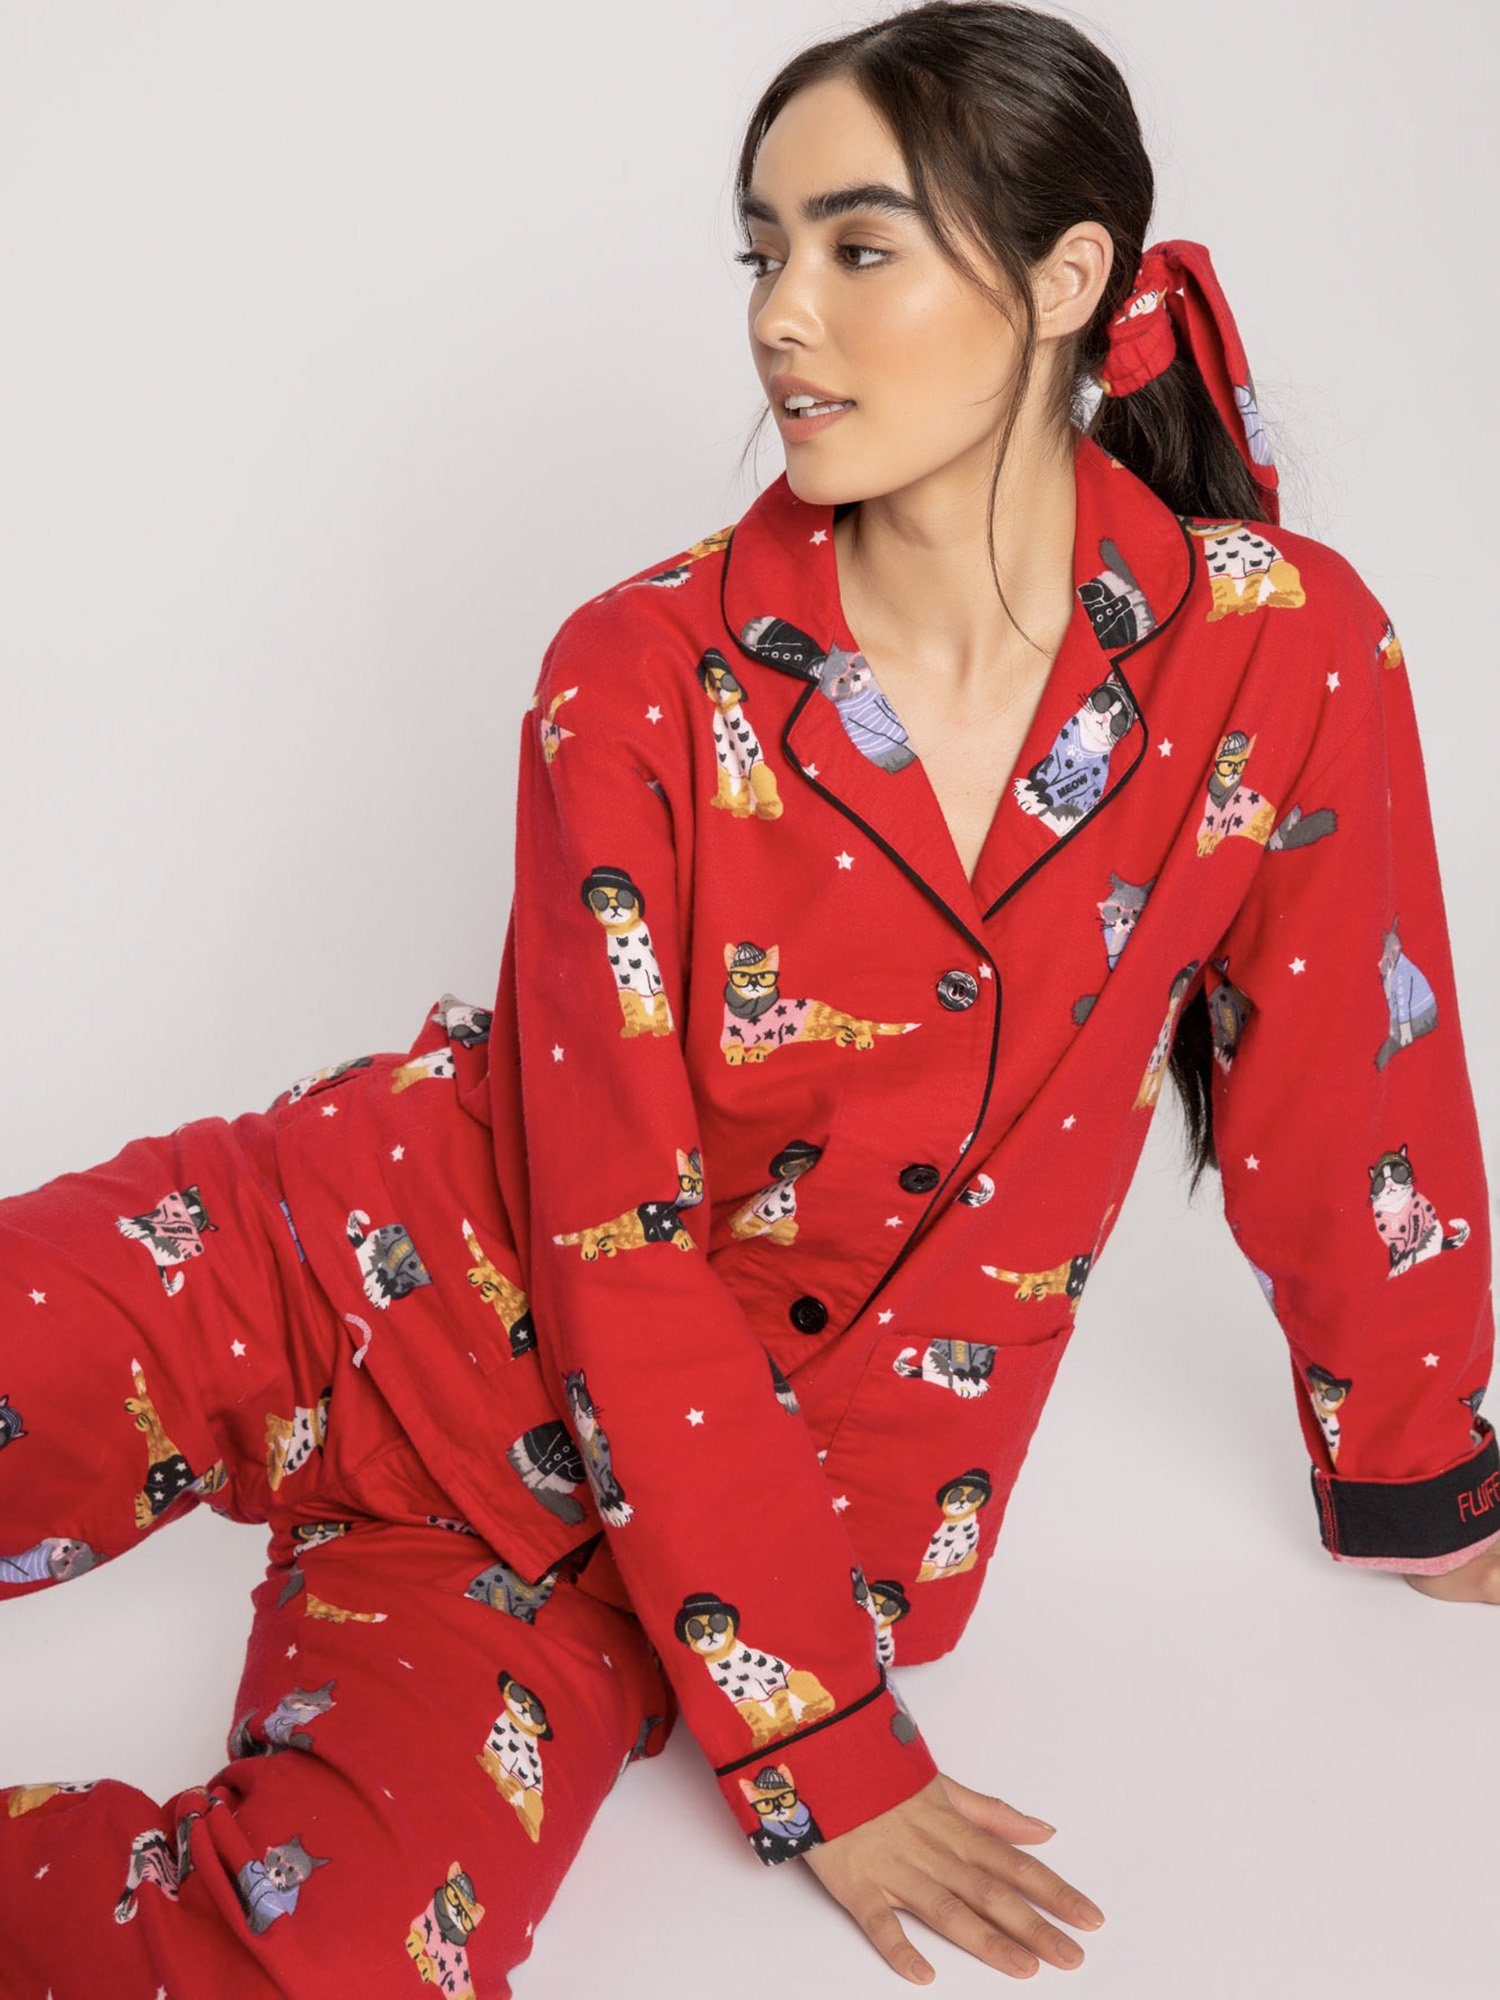 PJ Salvage Pyjama Flanells schlafanzug pyjama schlafmode rot